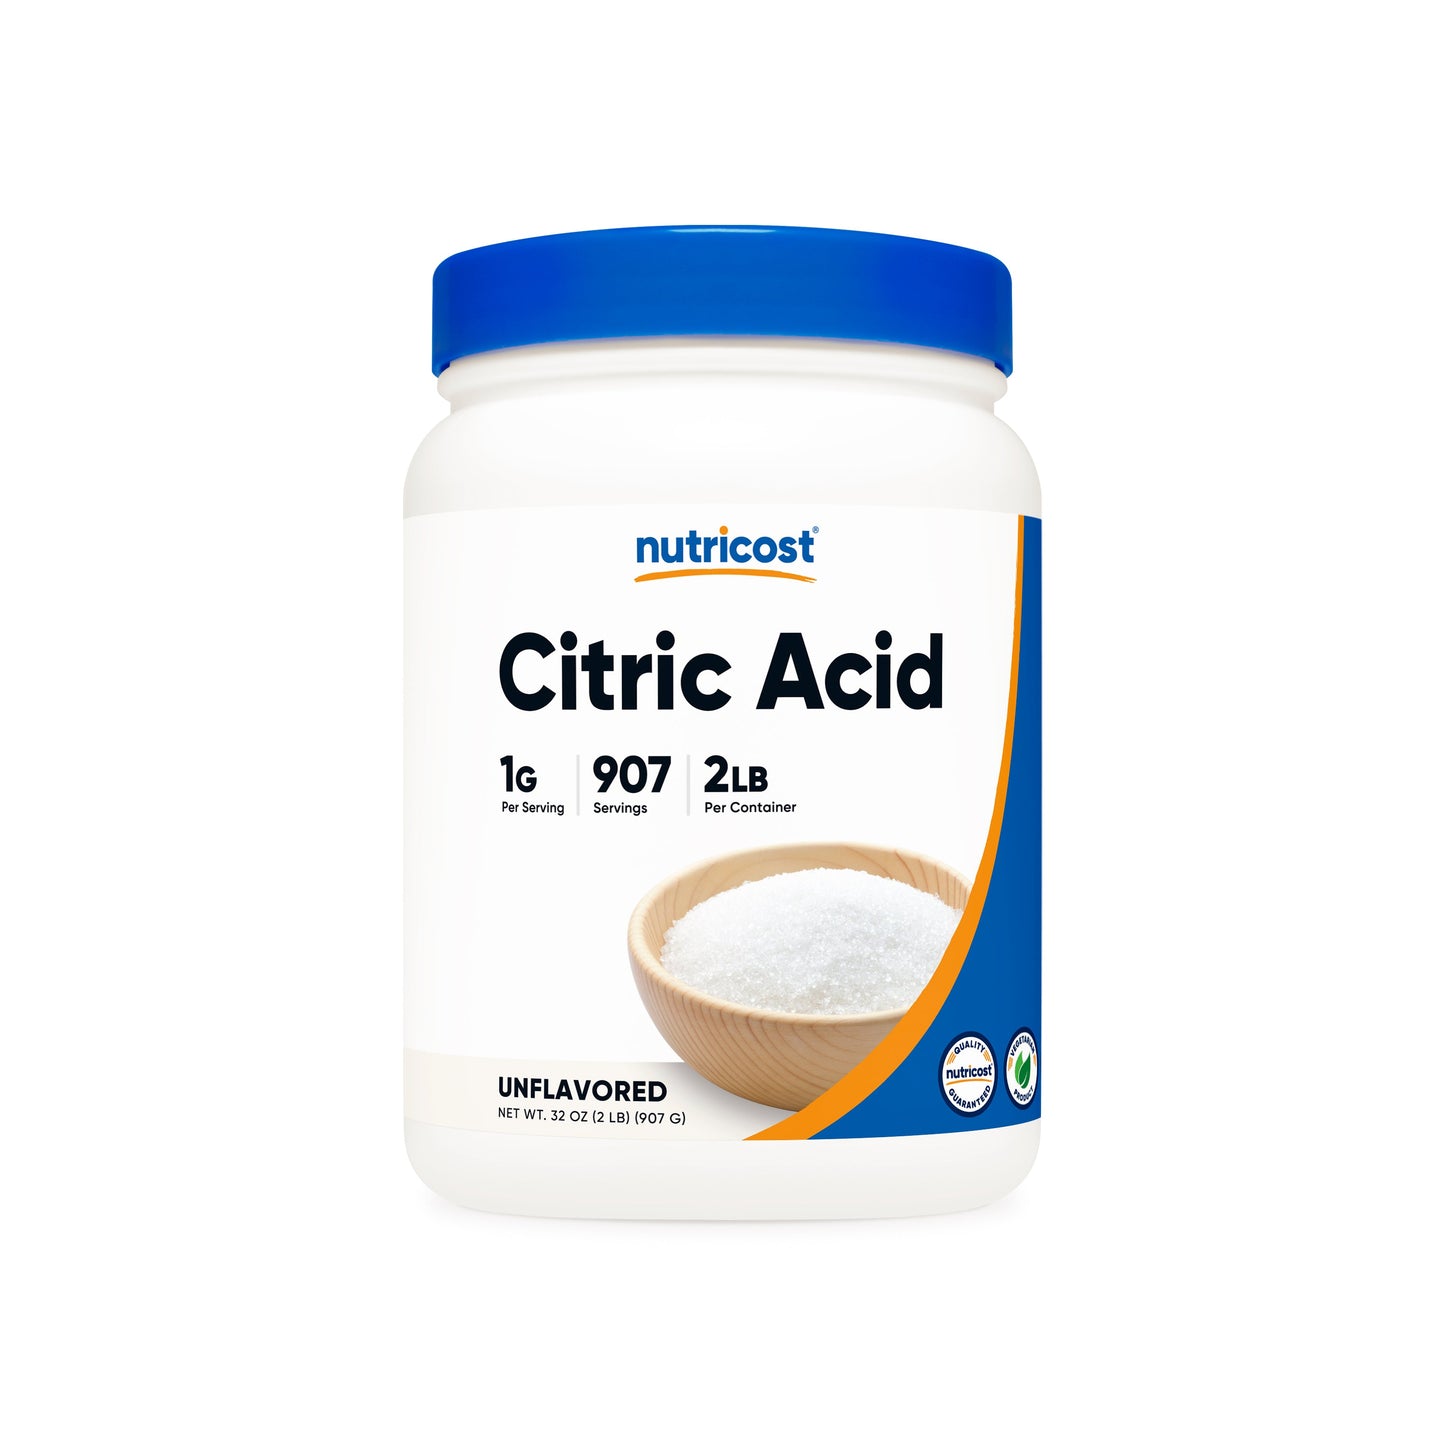 Nutricost Citric Acid Powder